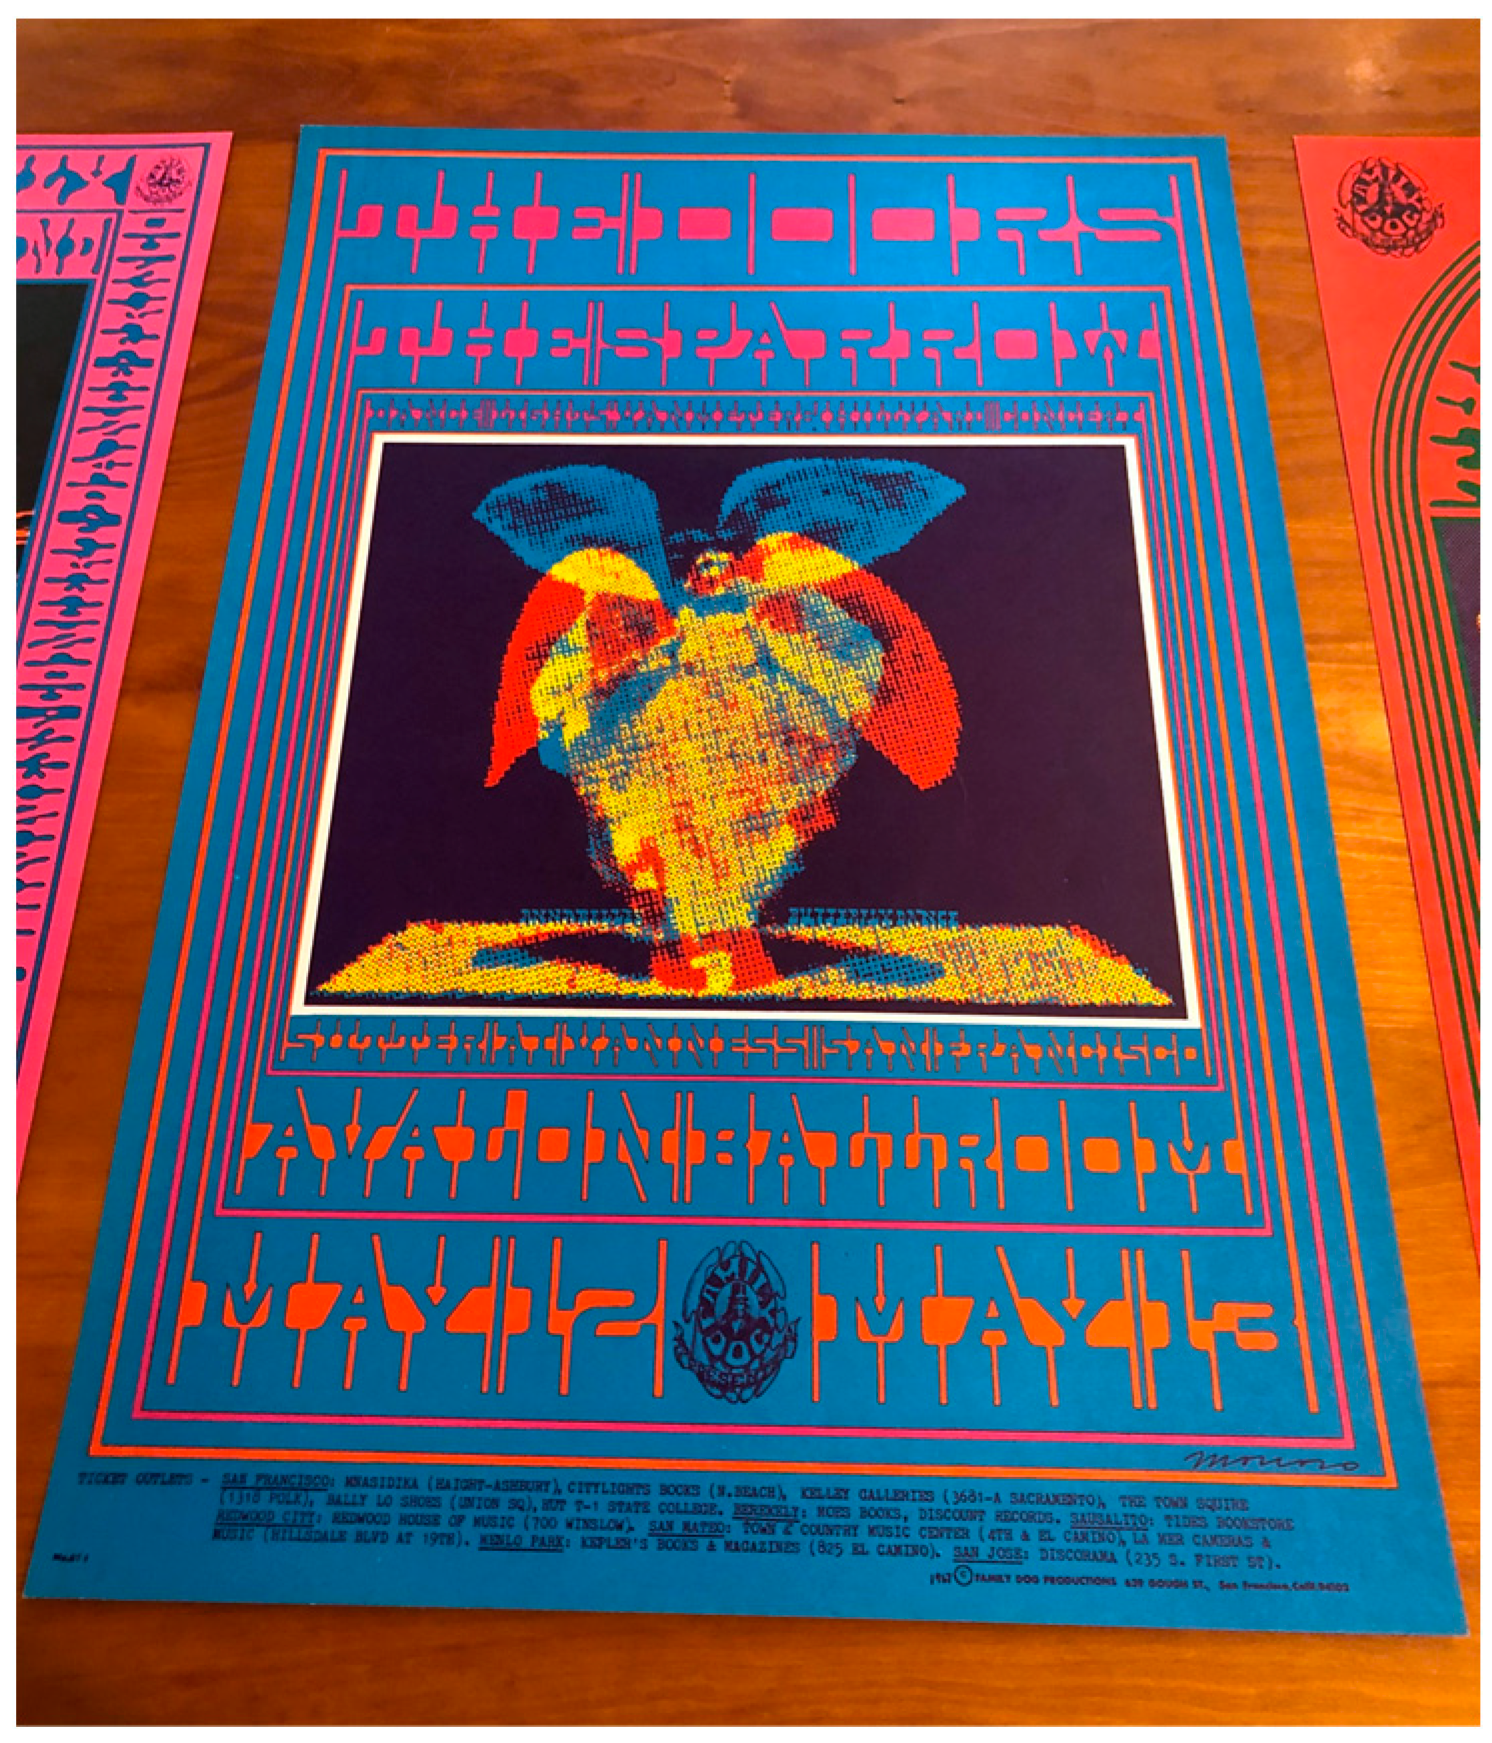 London Love Festival Poster 1960s Psychedelic retro MUSIC